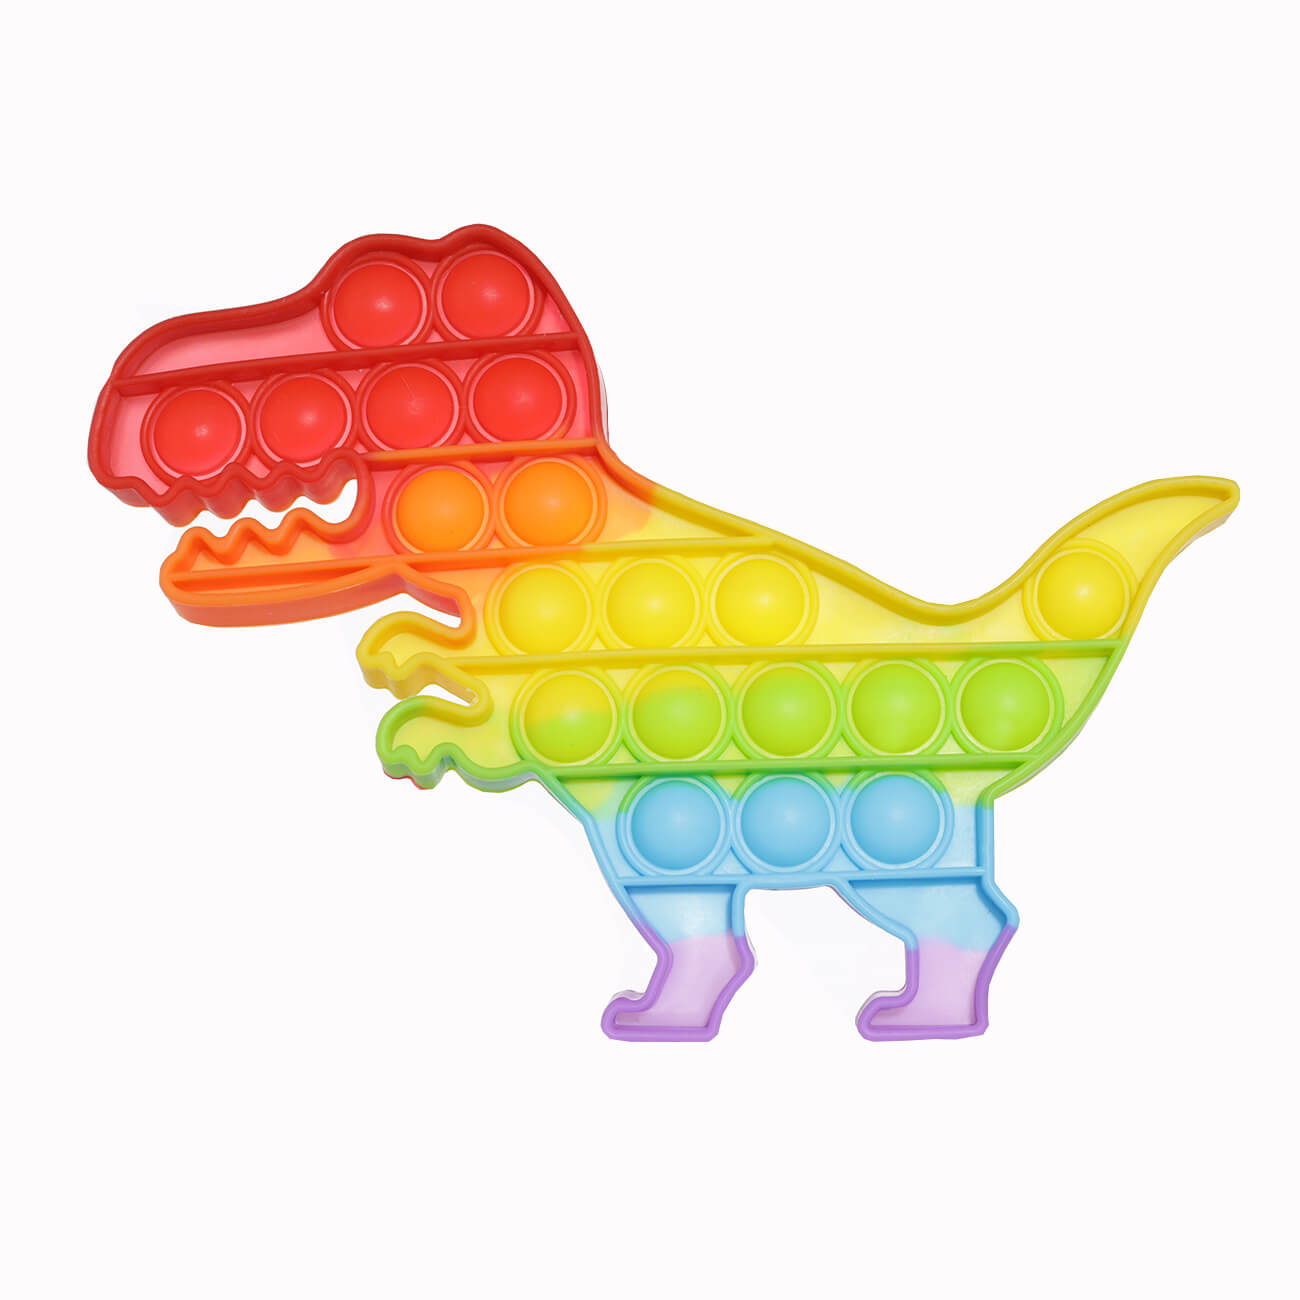 Игрушка-антистресс Pop-it, 19х14 см, силикон, цветная, Динозавр, Pop-it игрушка антистресс squidopop 35х15 см силикон цветная squidopop